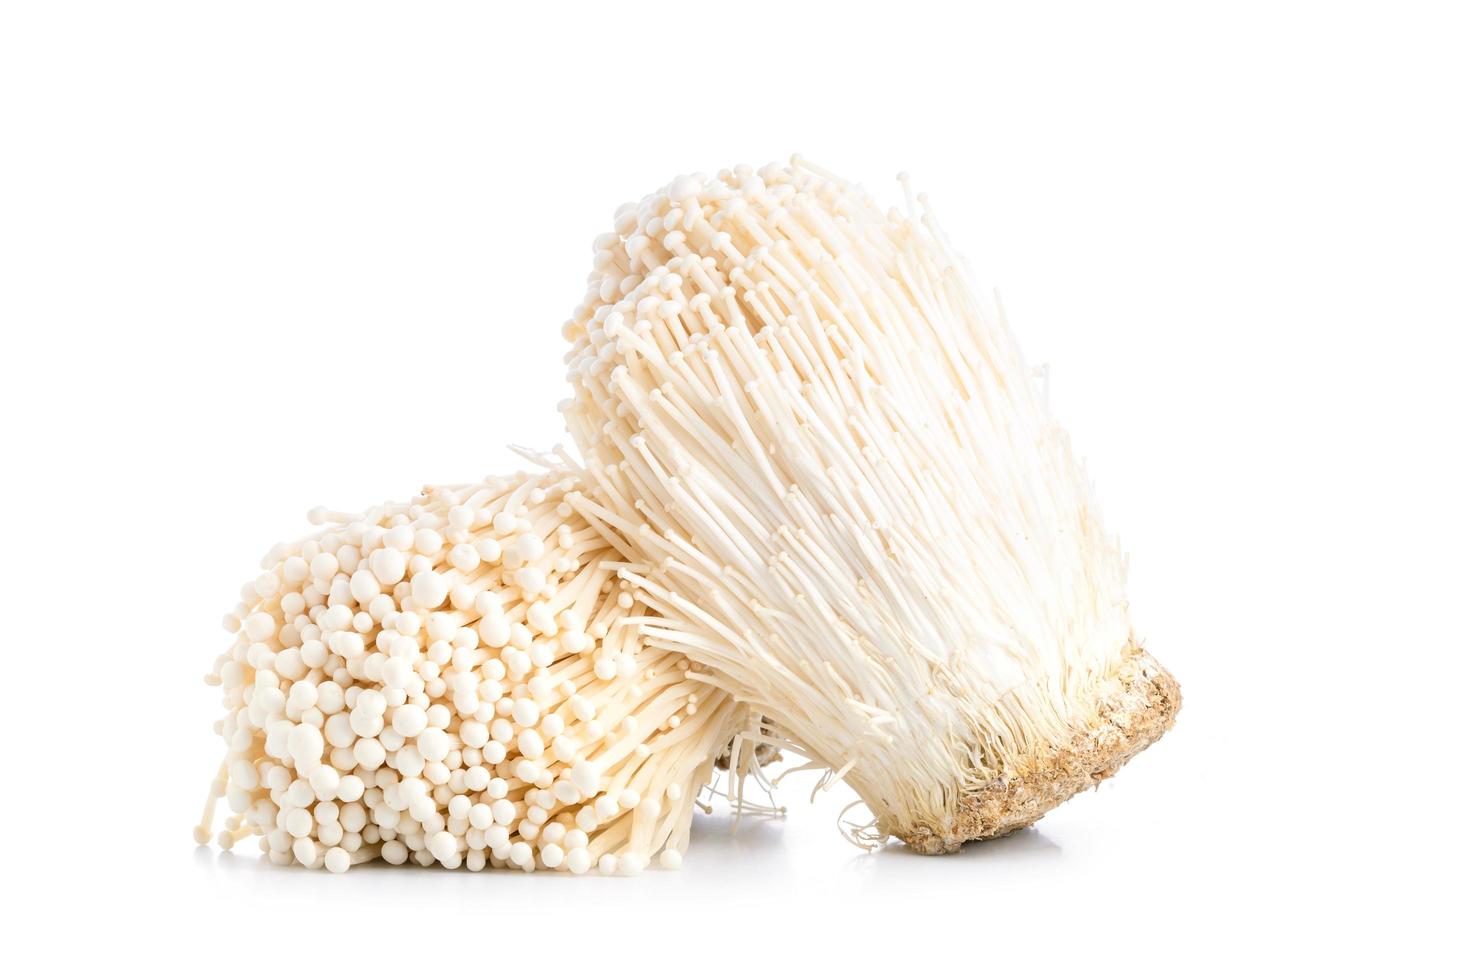 cogumelo de agulha dourada fresco branco ou cogumelo enoki isolado em branco foto